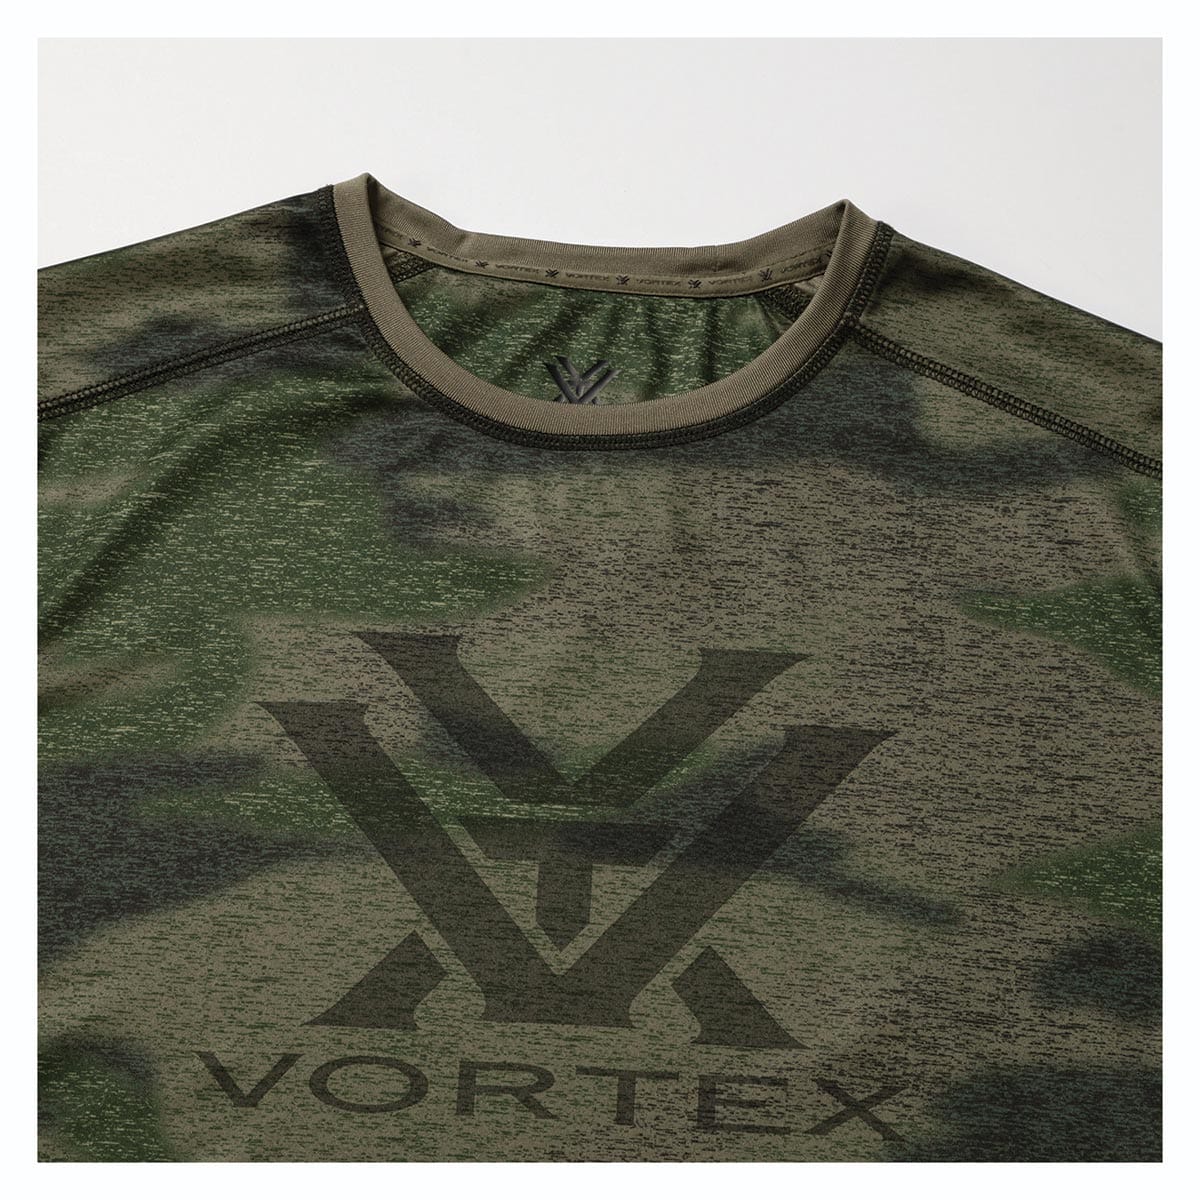 Vortex Optics Sun Slayer Shirt